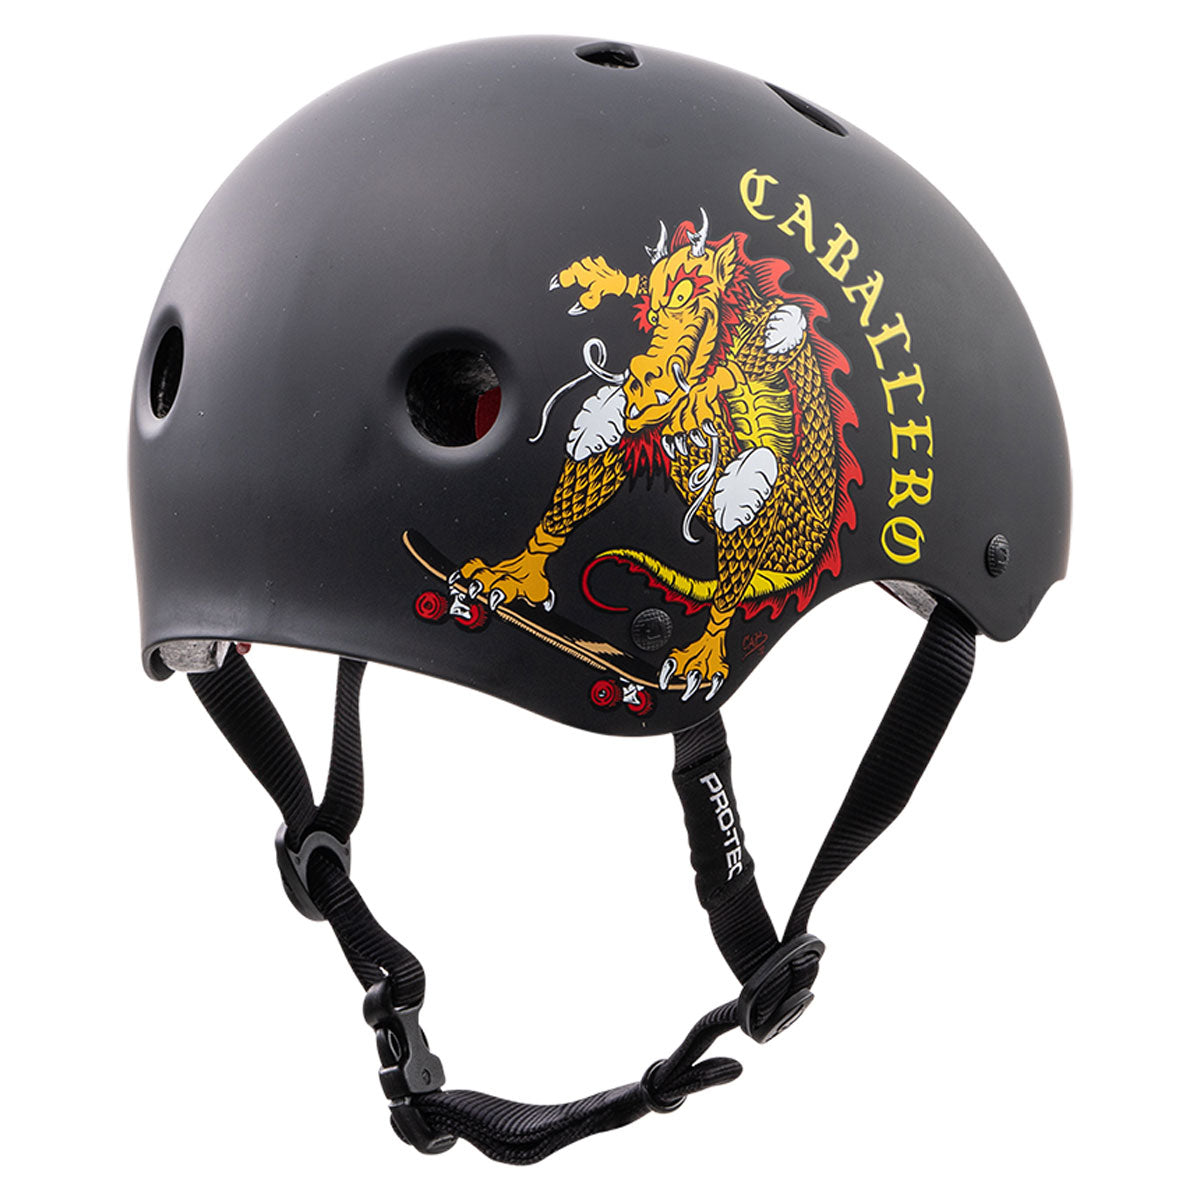 Pro-Tec Classic Certified Cab Dragon Helmet - Matte Black image 2